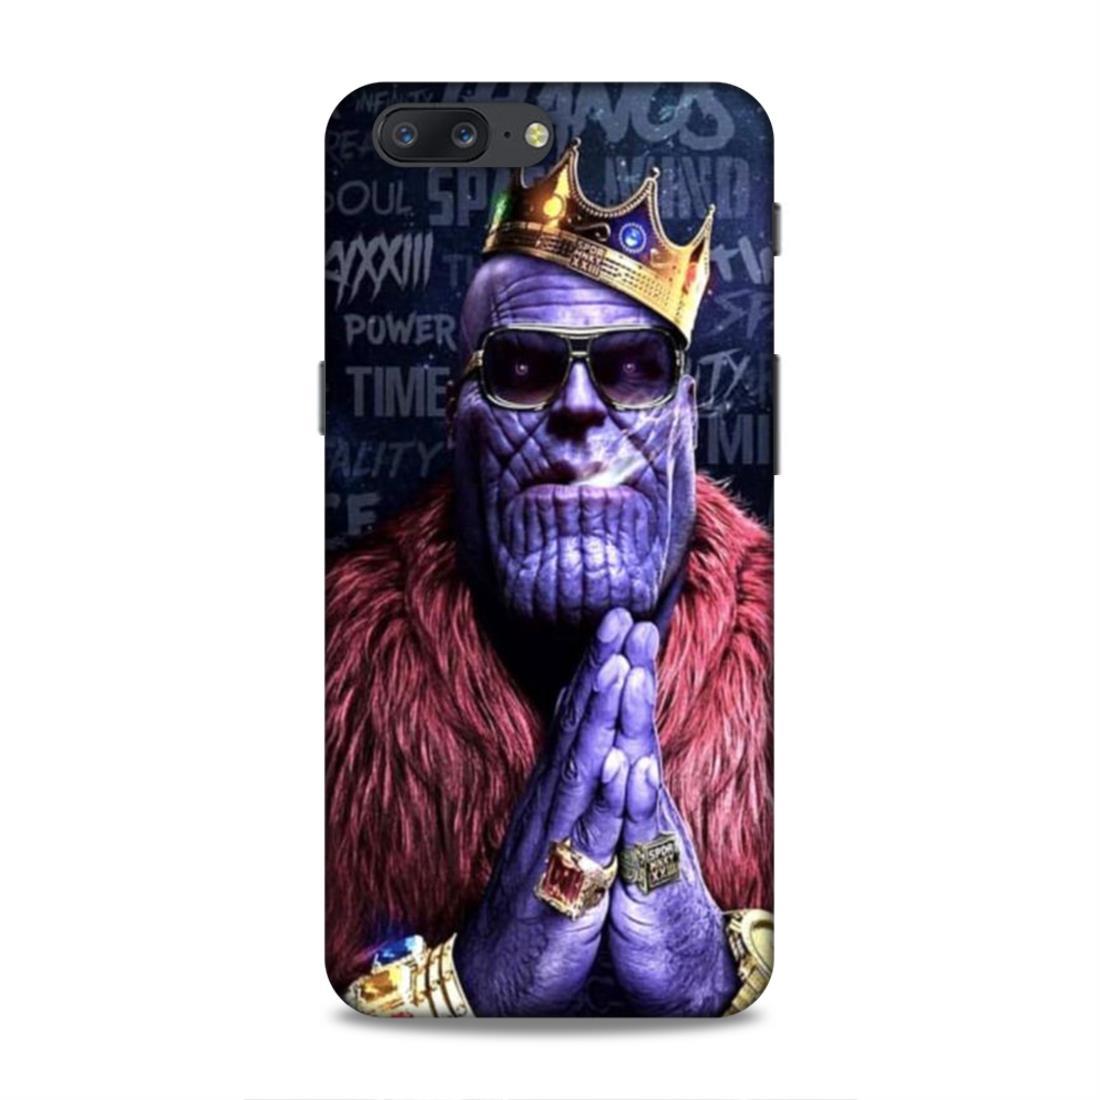 Thanoss Fanart OnePlus 5 Phone Back Cover